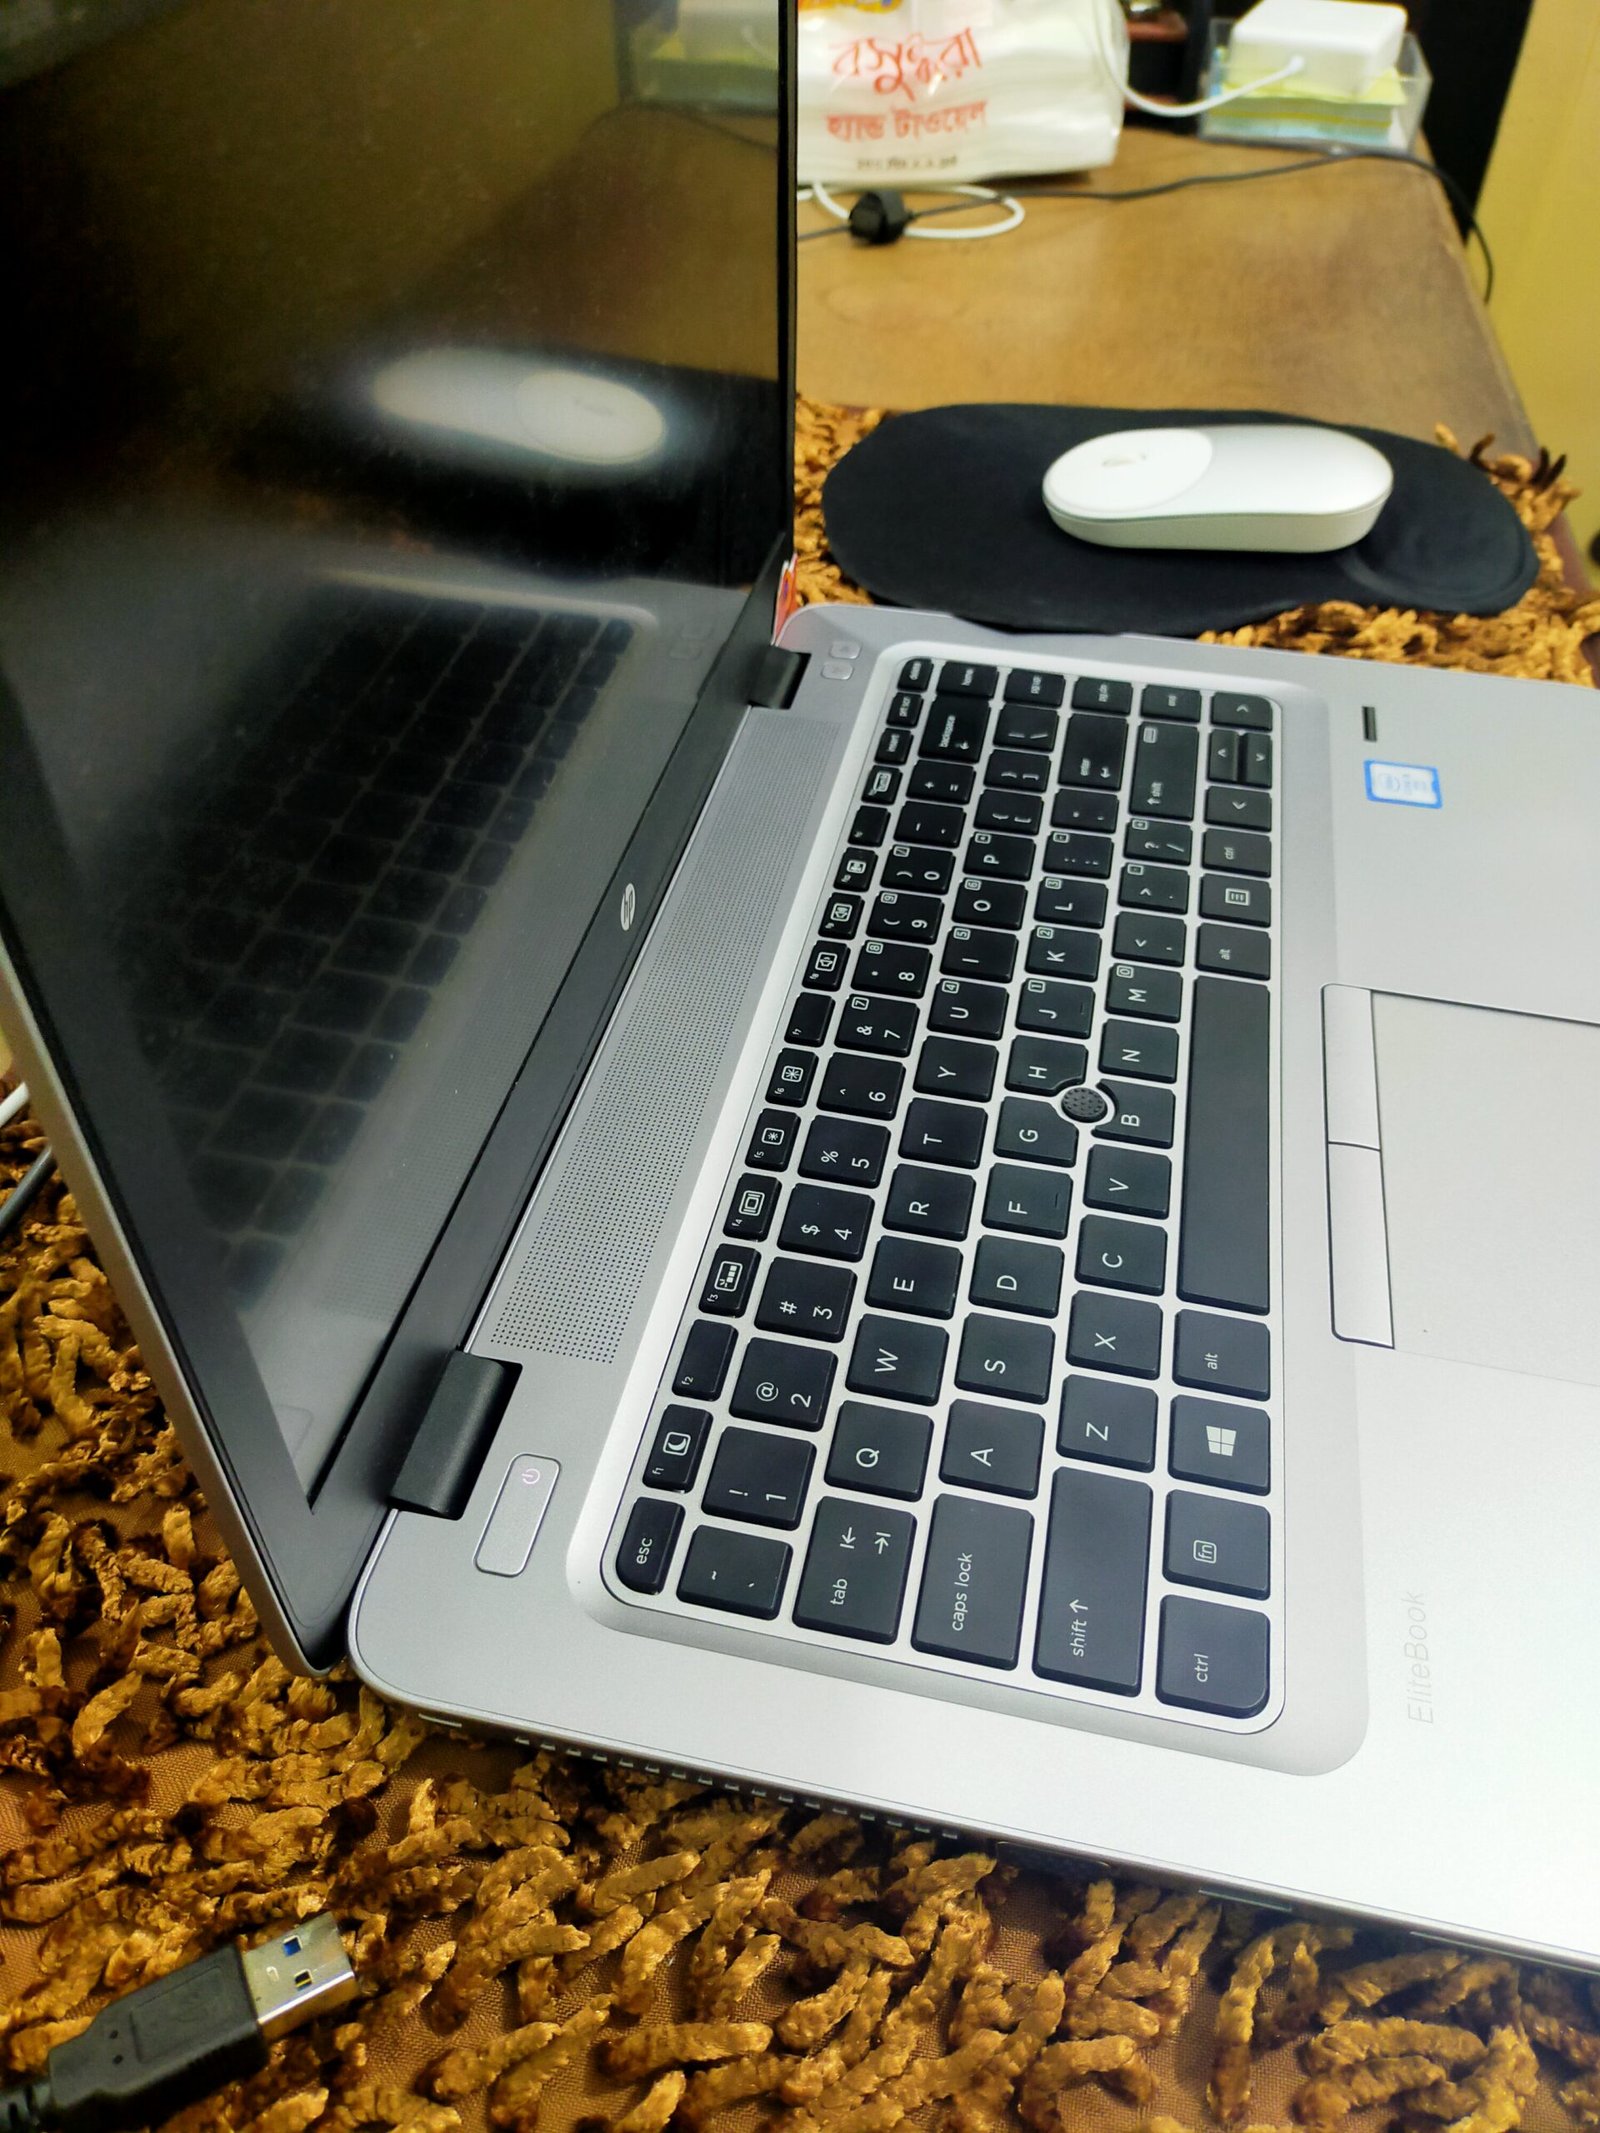 HP Elitebook laptop